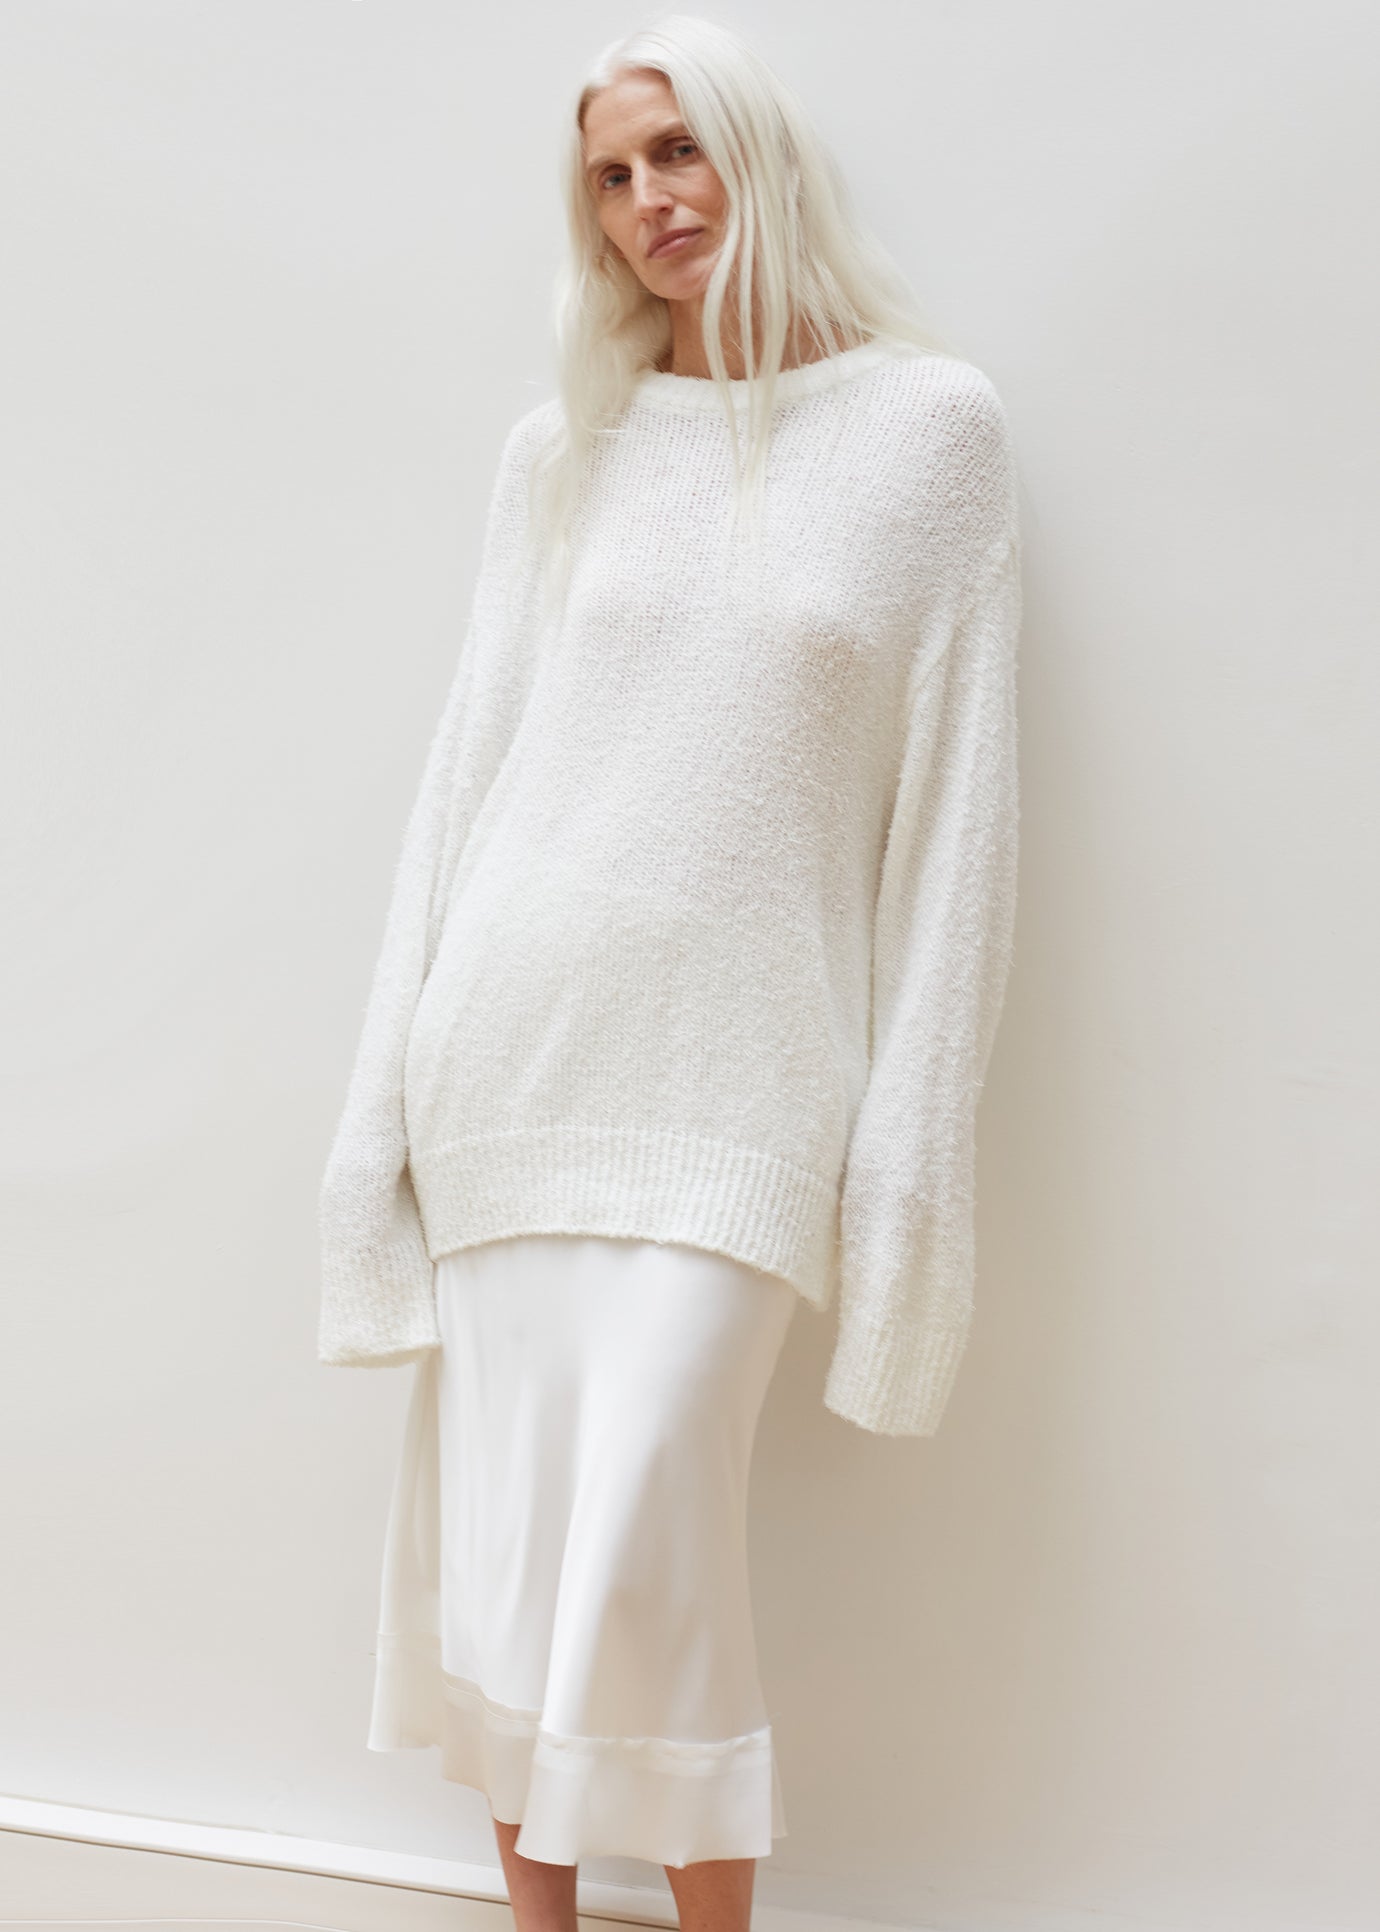 Ahine Sweater - White - 1